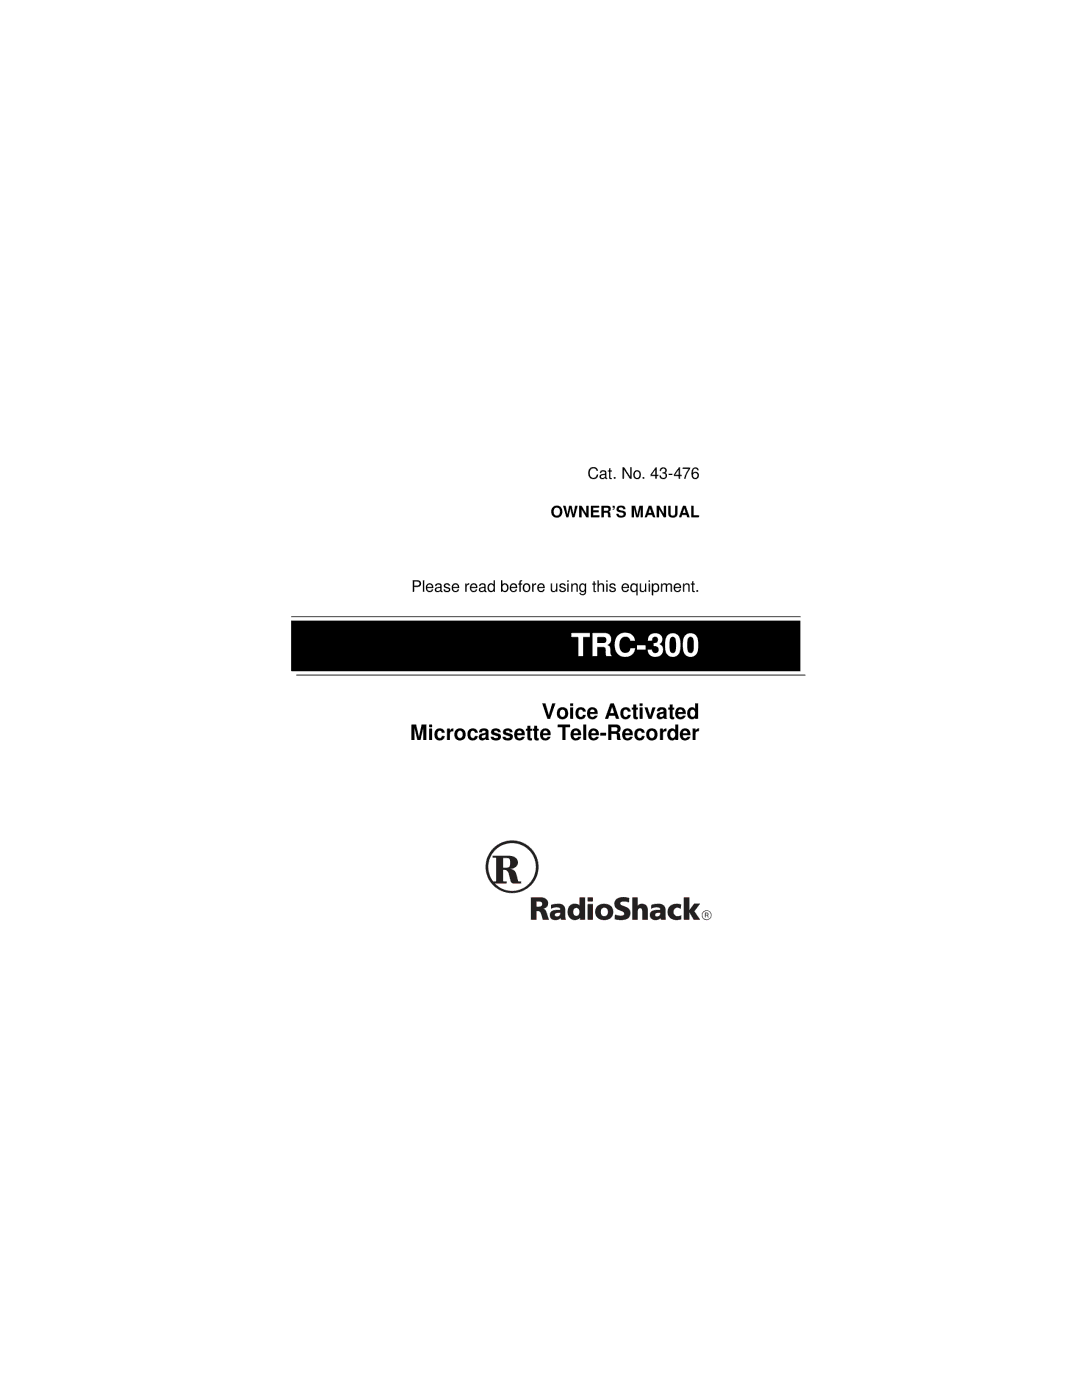 Radio Shack 43-476 owner manual TRC-300 